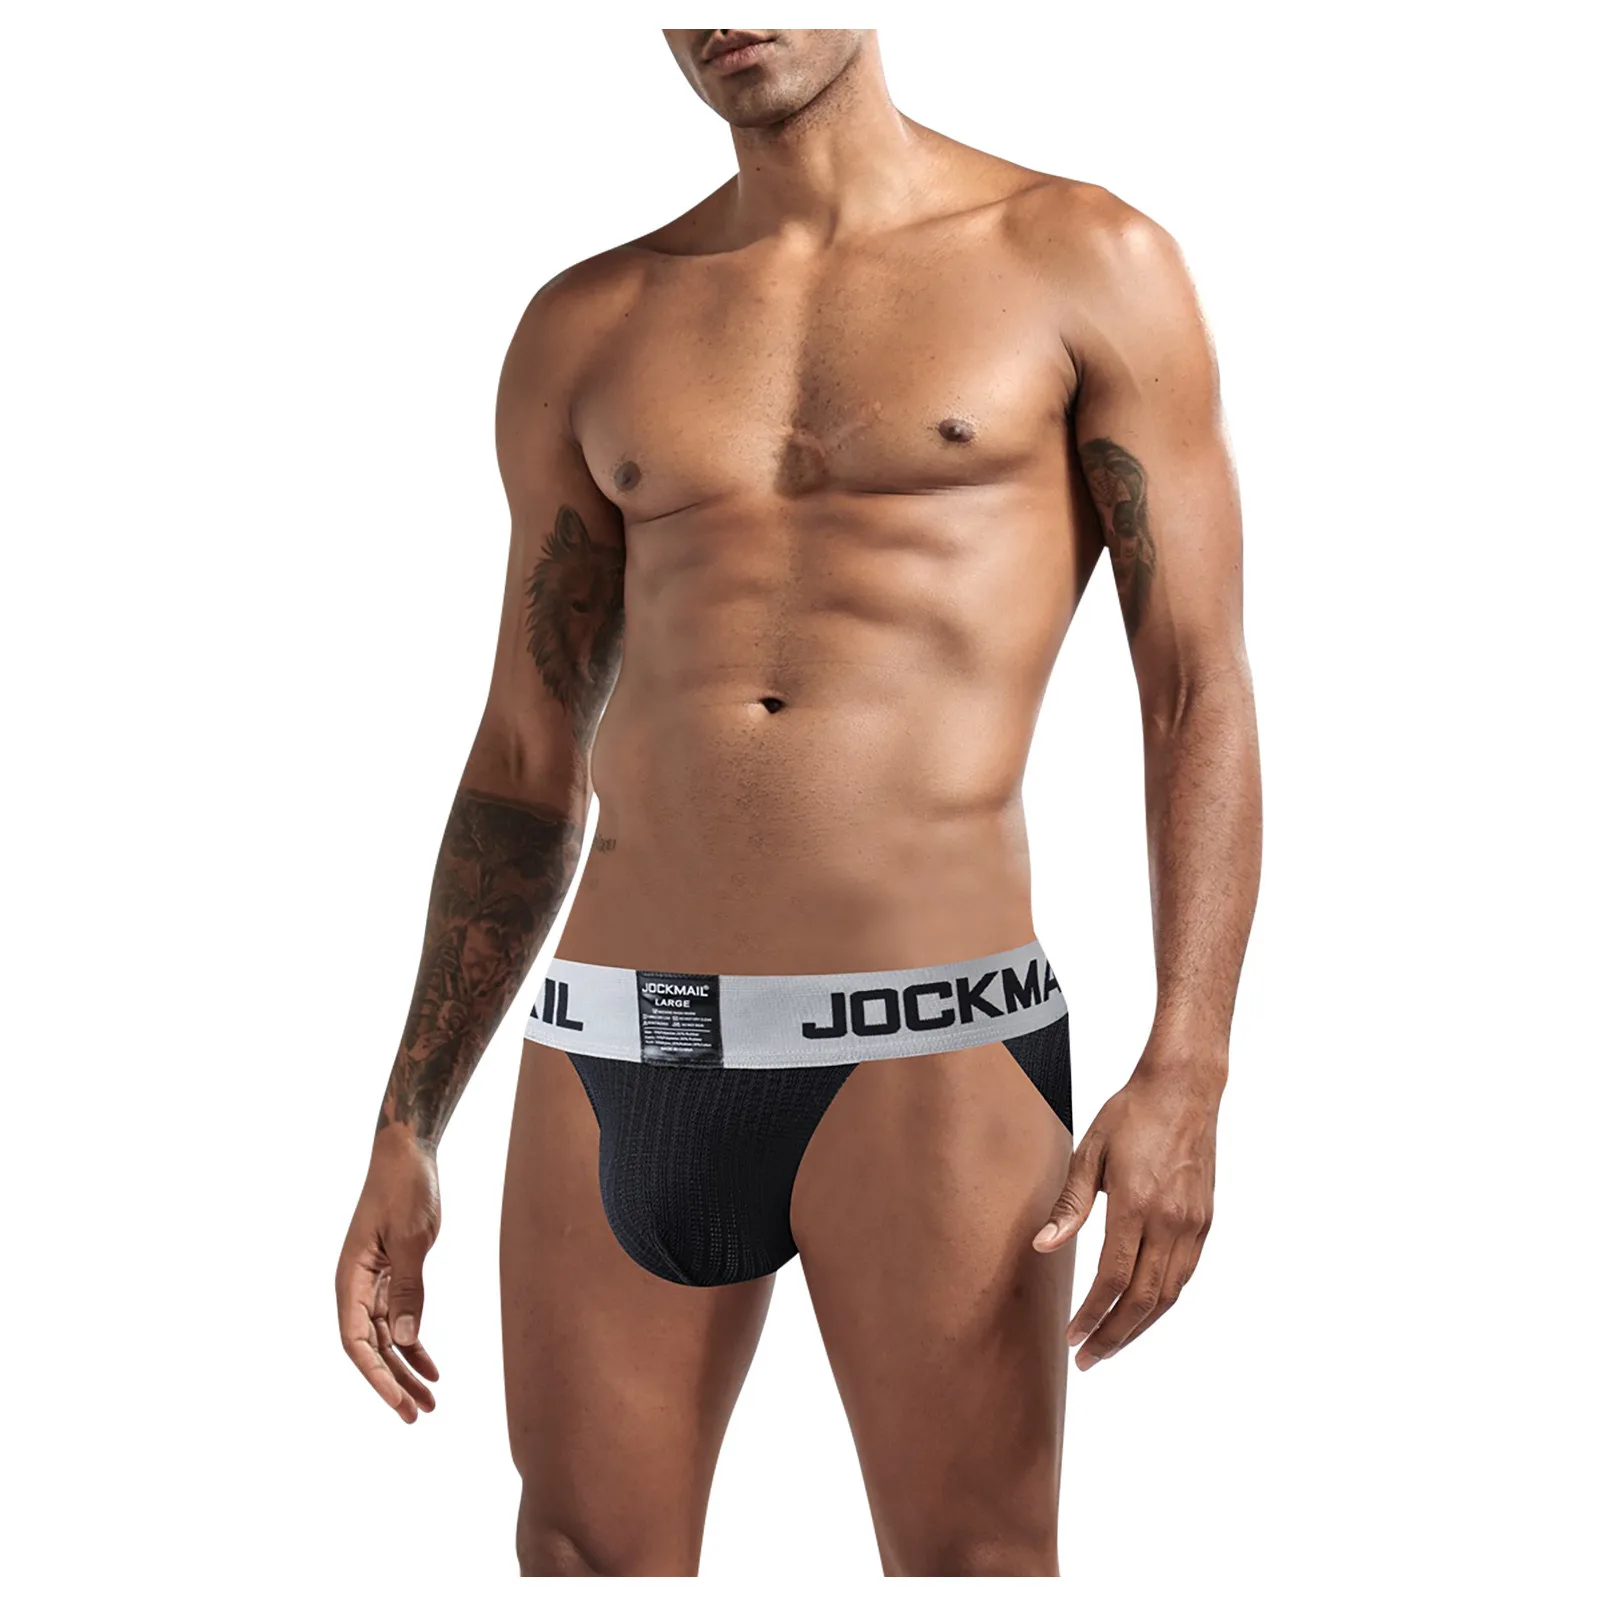 JOCKMAIL Sexy Men Underwear Mesh Gay Jockstraps Stretch Low waist